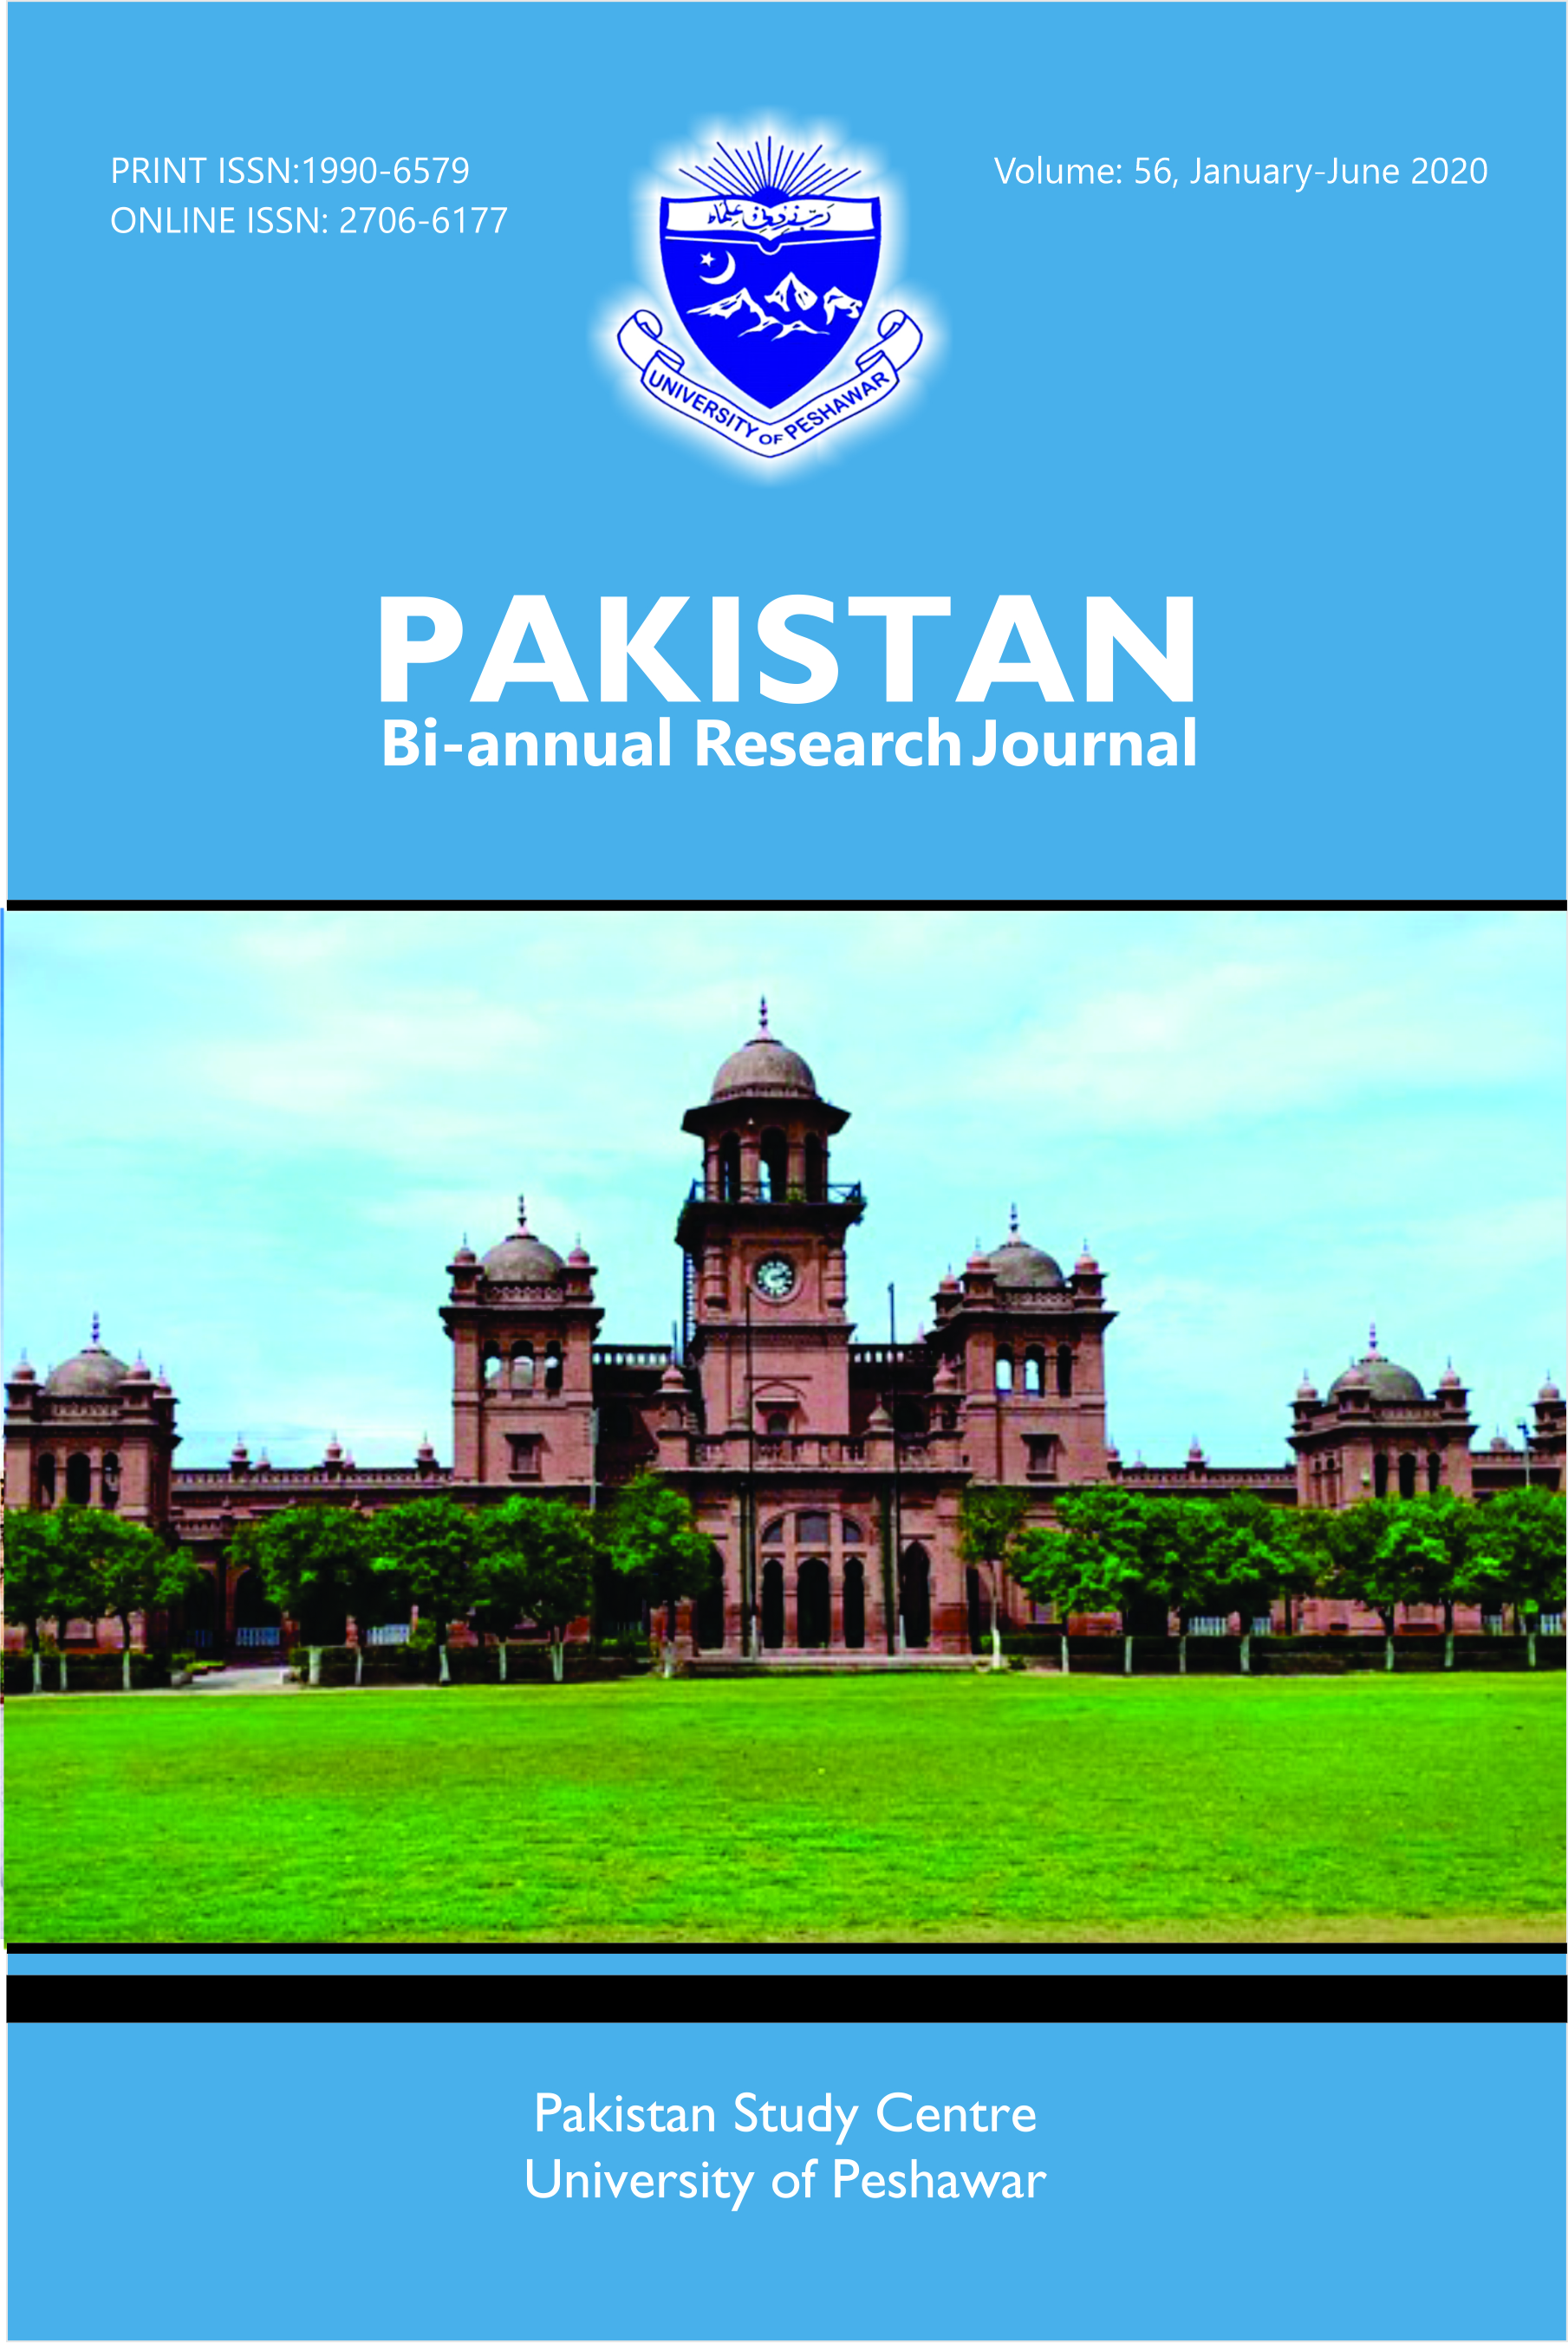 					View Vol. 56 No. 1 (2020): Pakistan (Jan-June 2020)
				